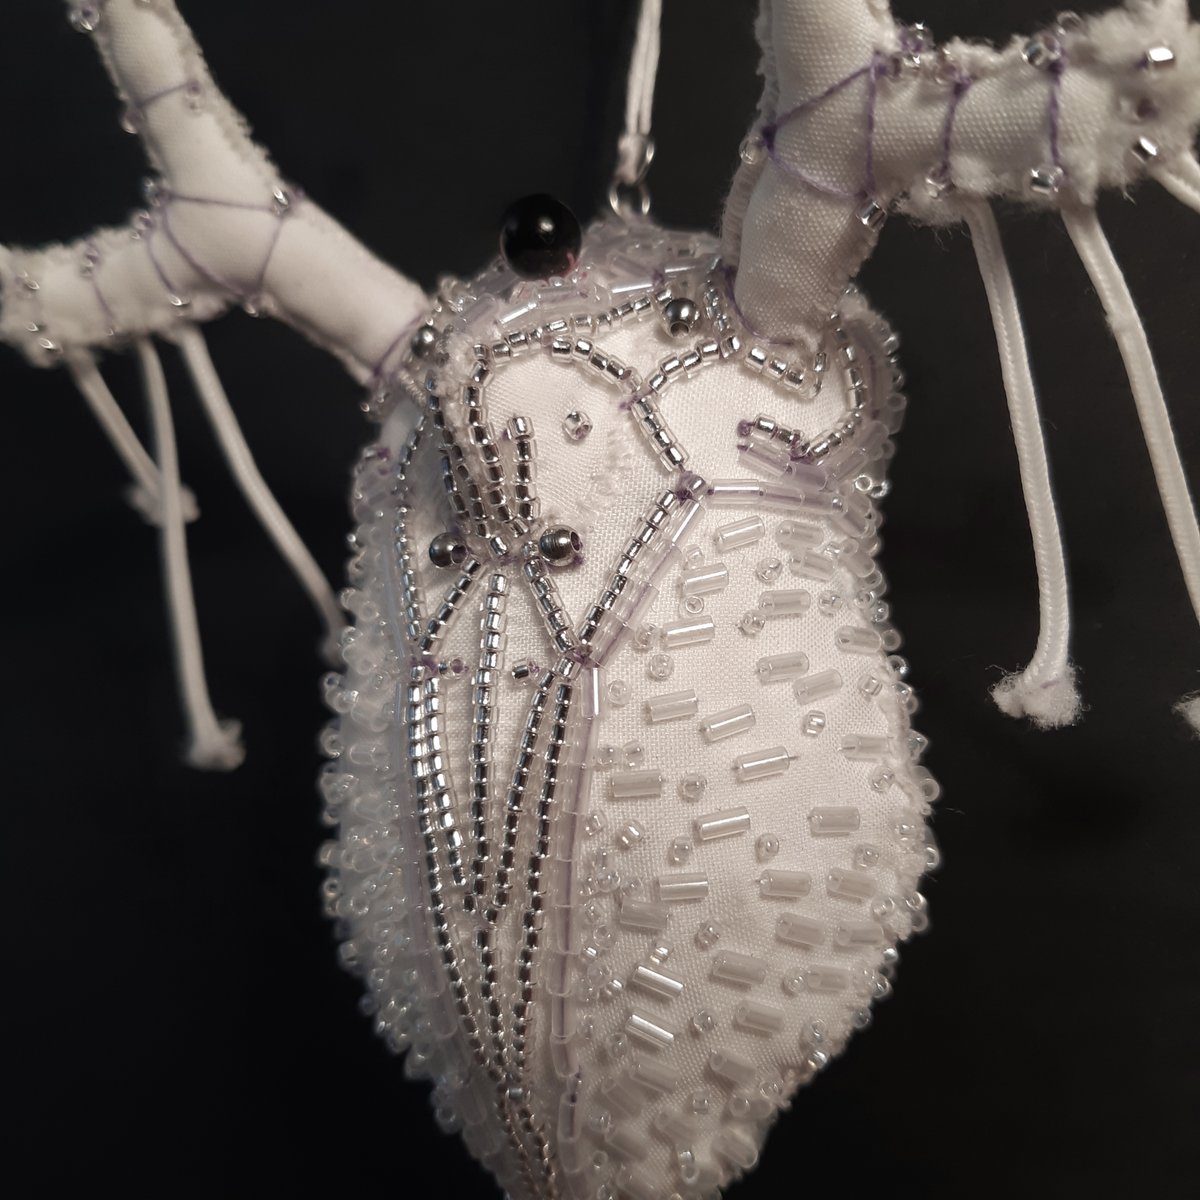 Daphnia handmade 
by me

Daphnia, a genus of small planktonic crustaceans. 
#softsculpture #craft #handmade #daphnia #textilesculpture #animalart